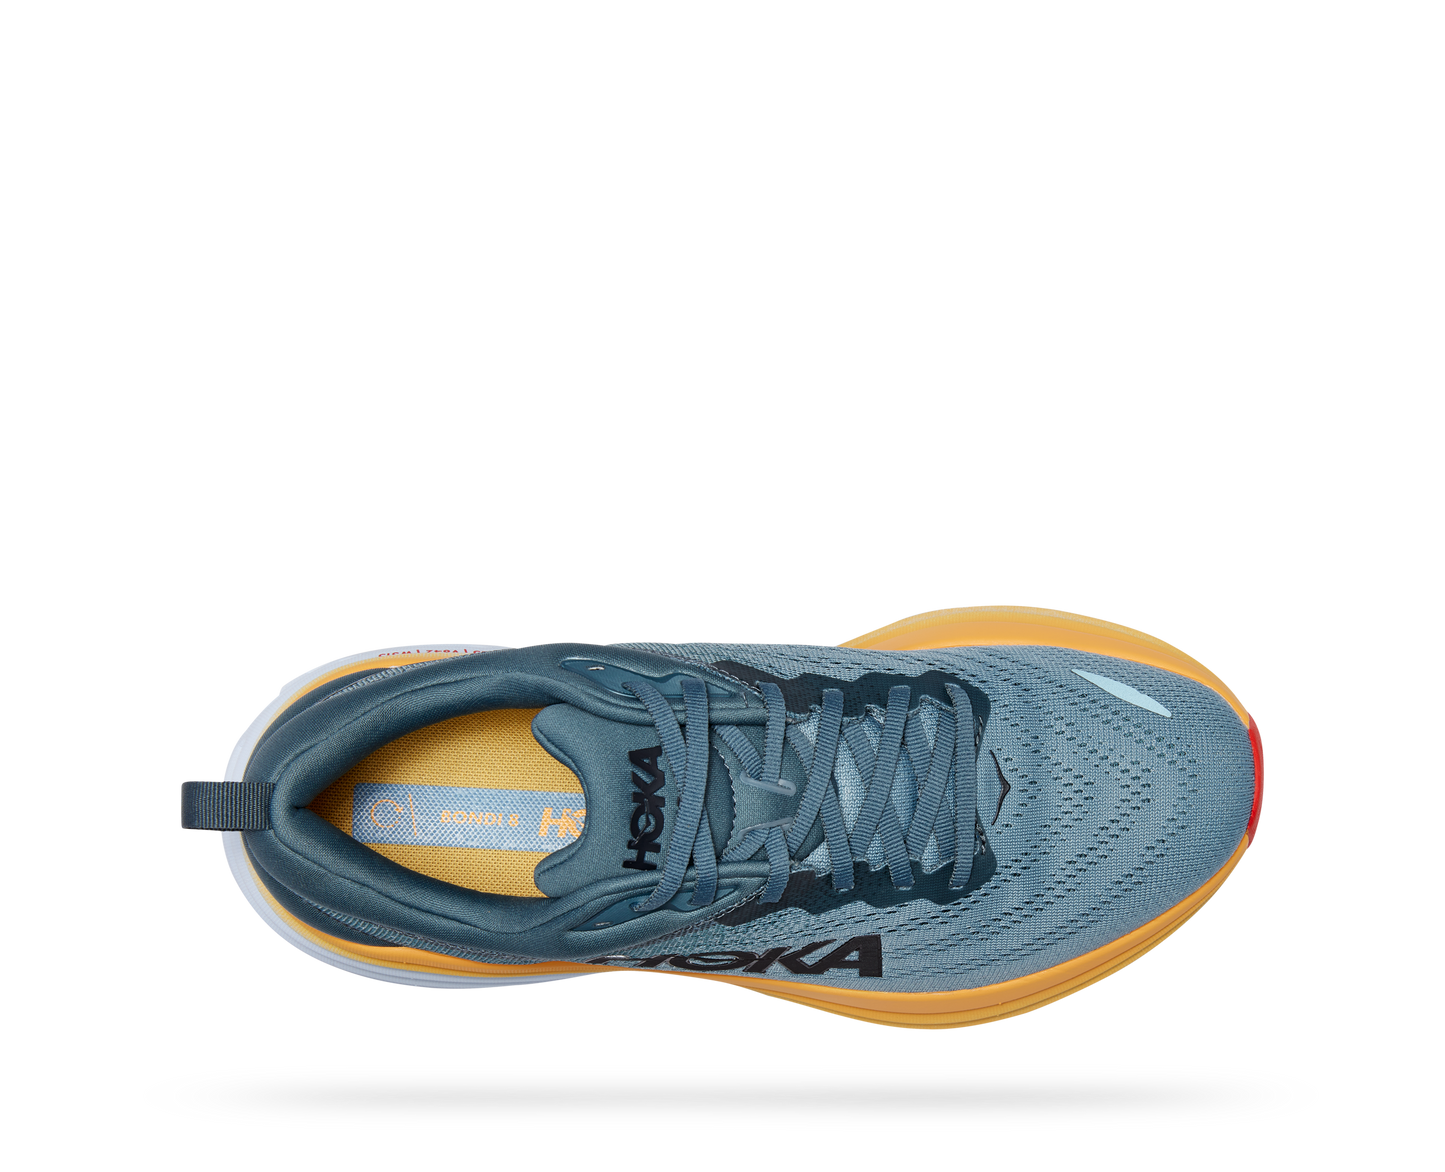 Hoka running shoe grey with yellow and white soles.